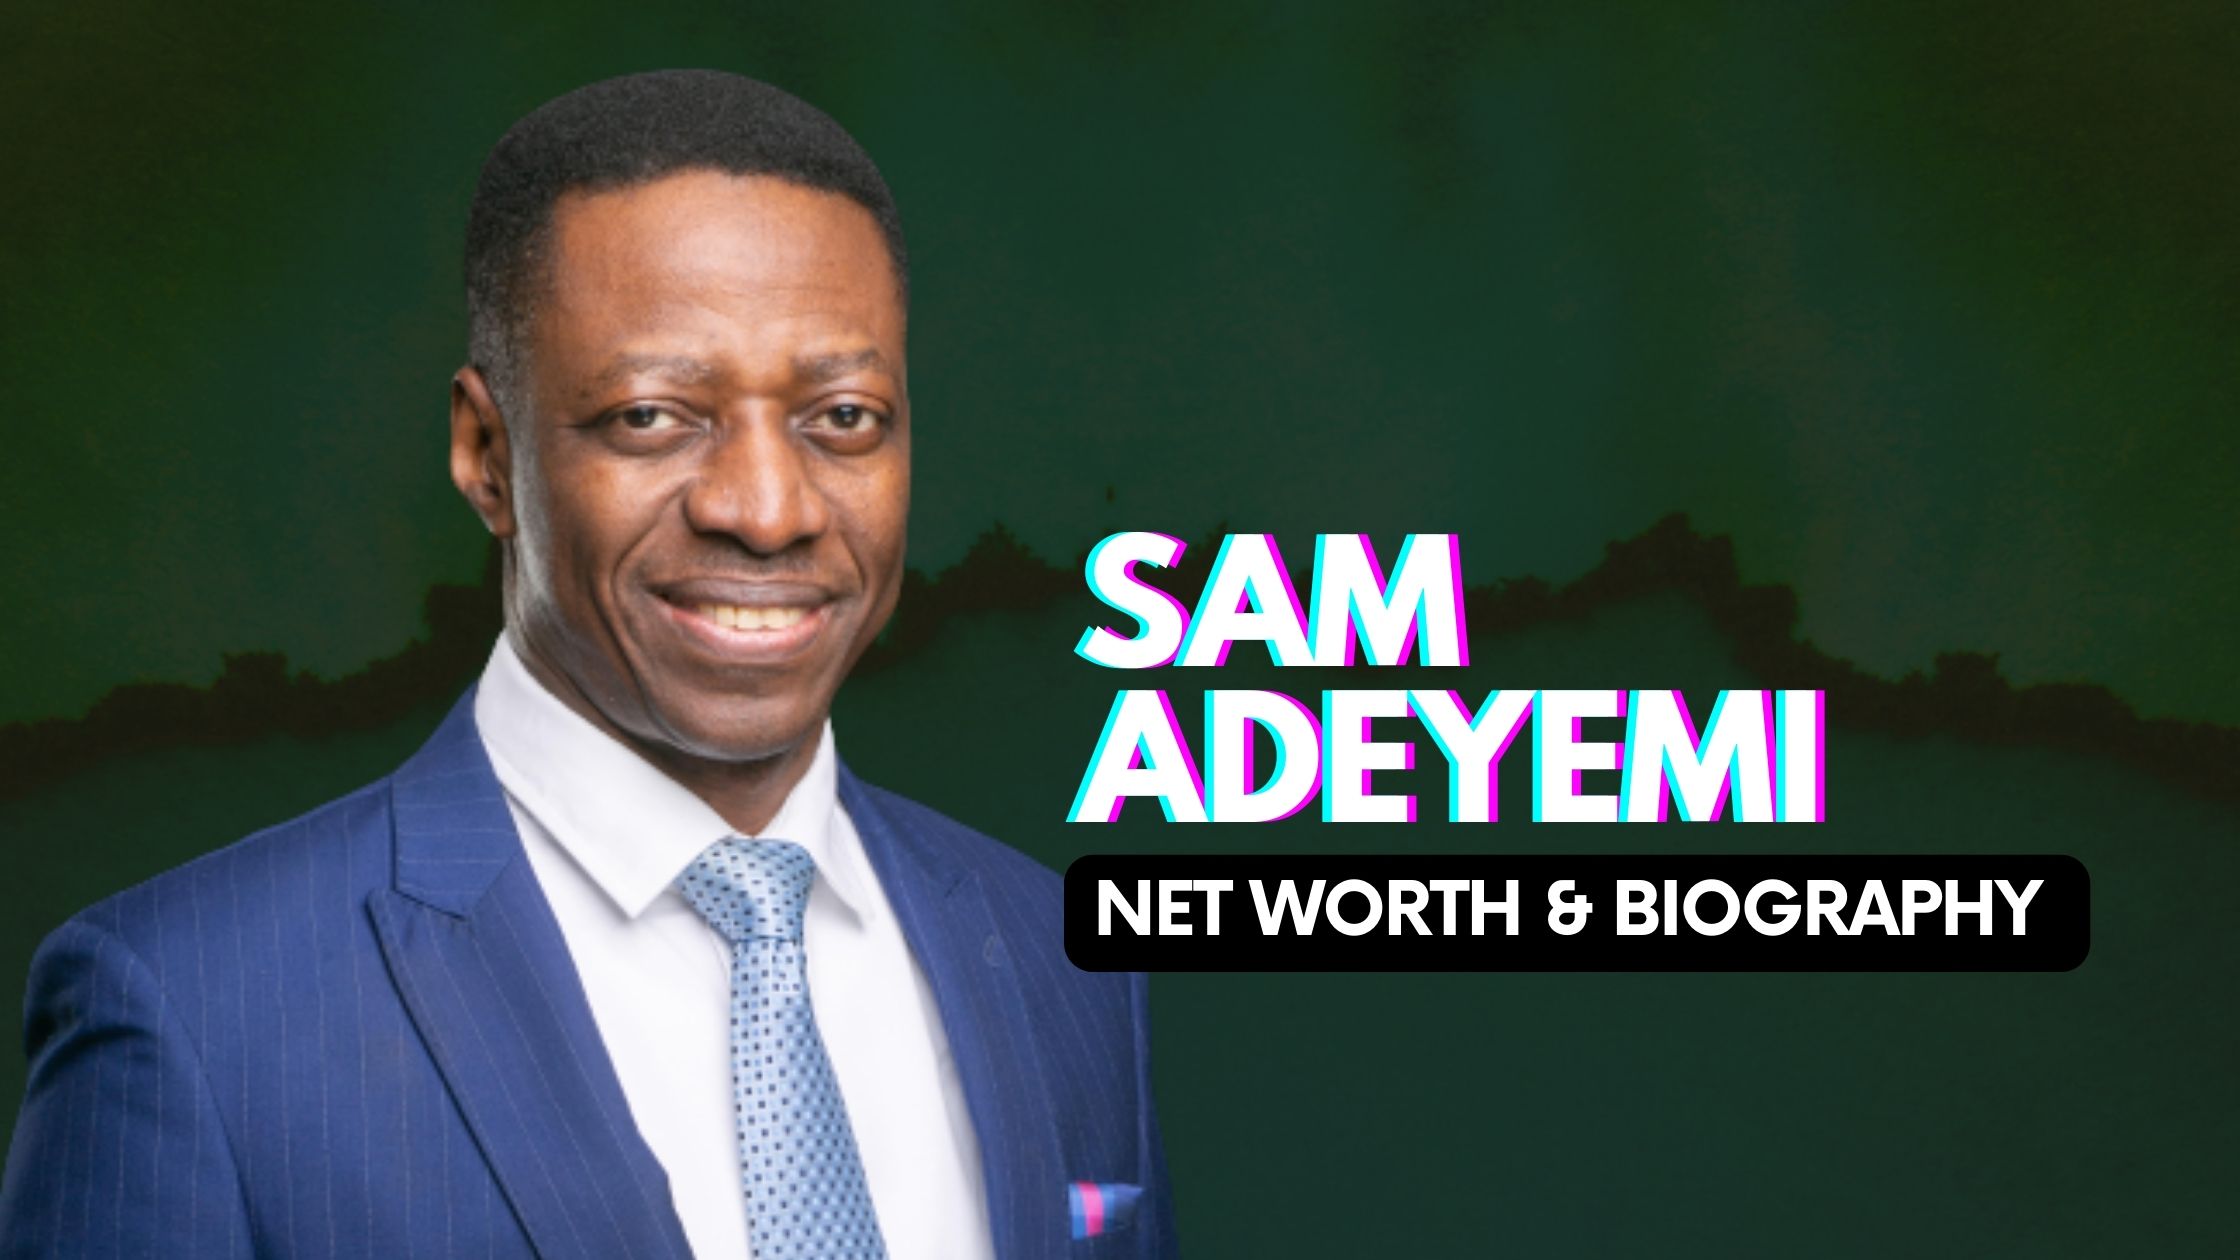 Sam Adeyemi Net Worth